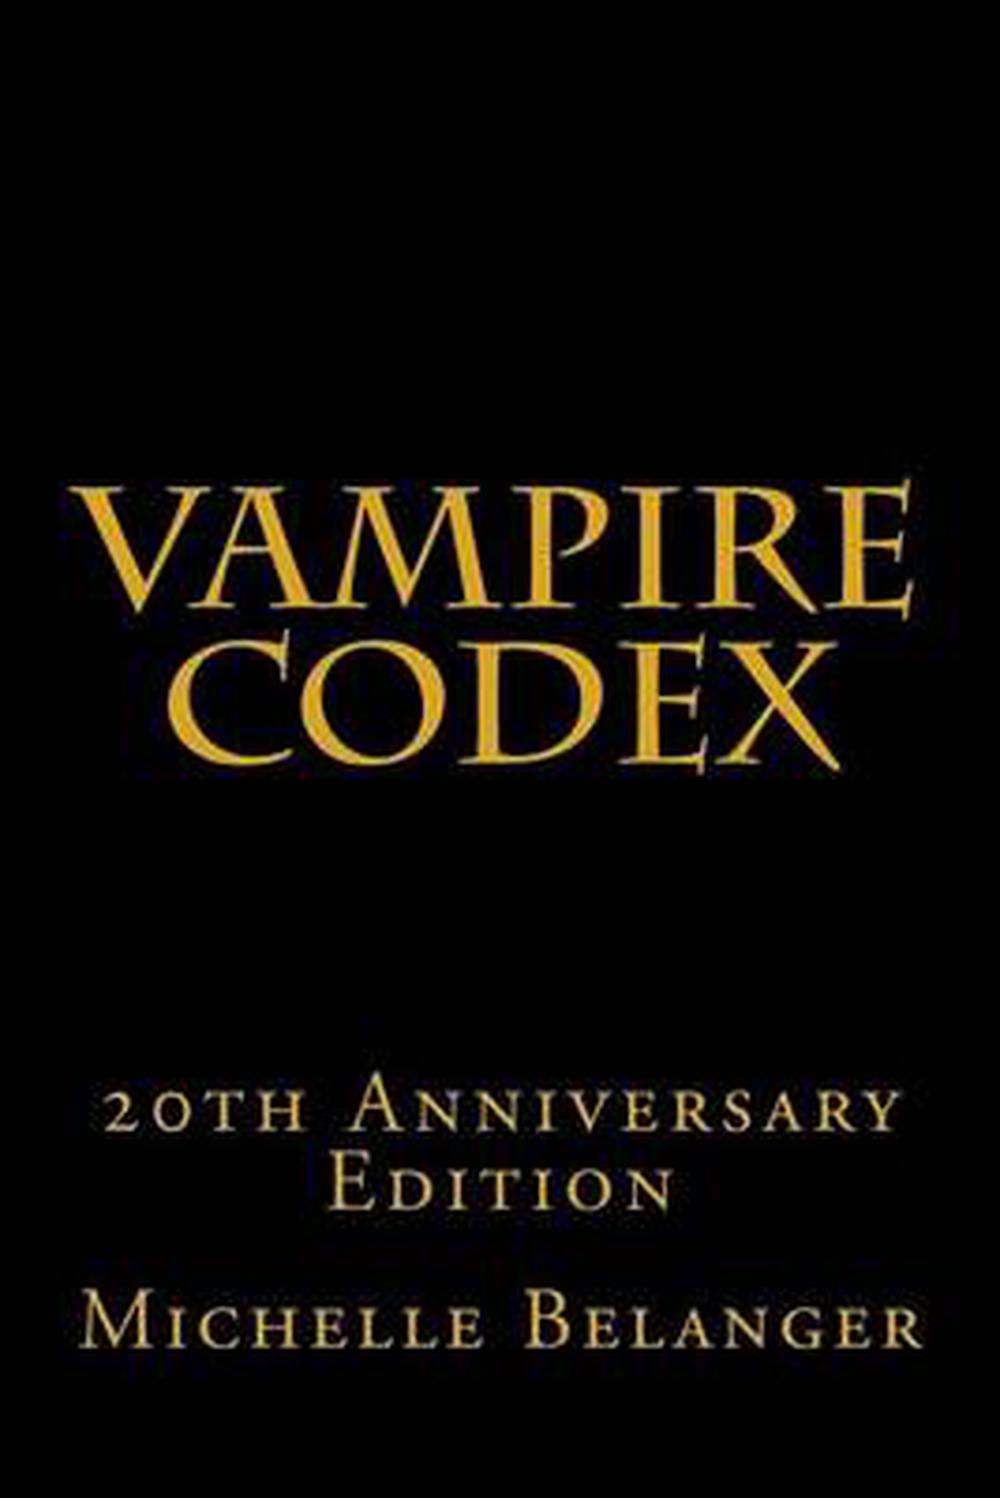 The Psychic Vampire Codex by Michelle Belanger